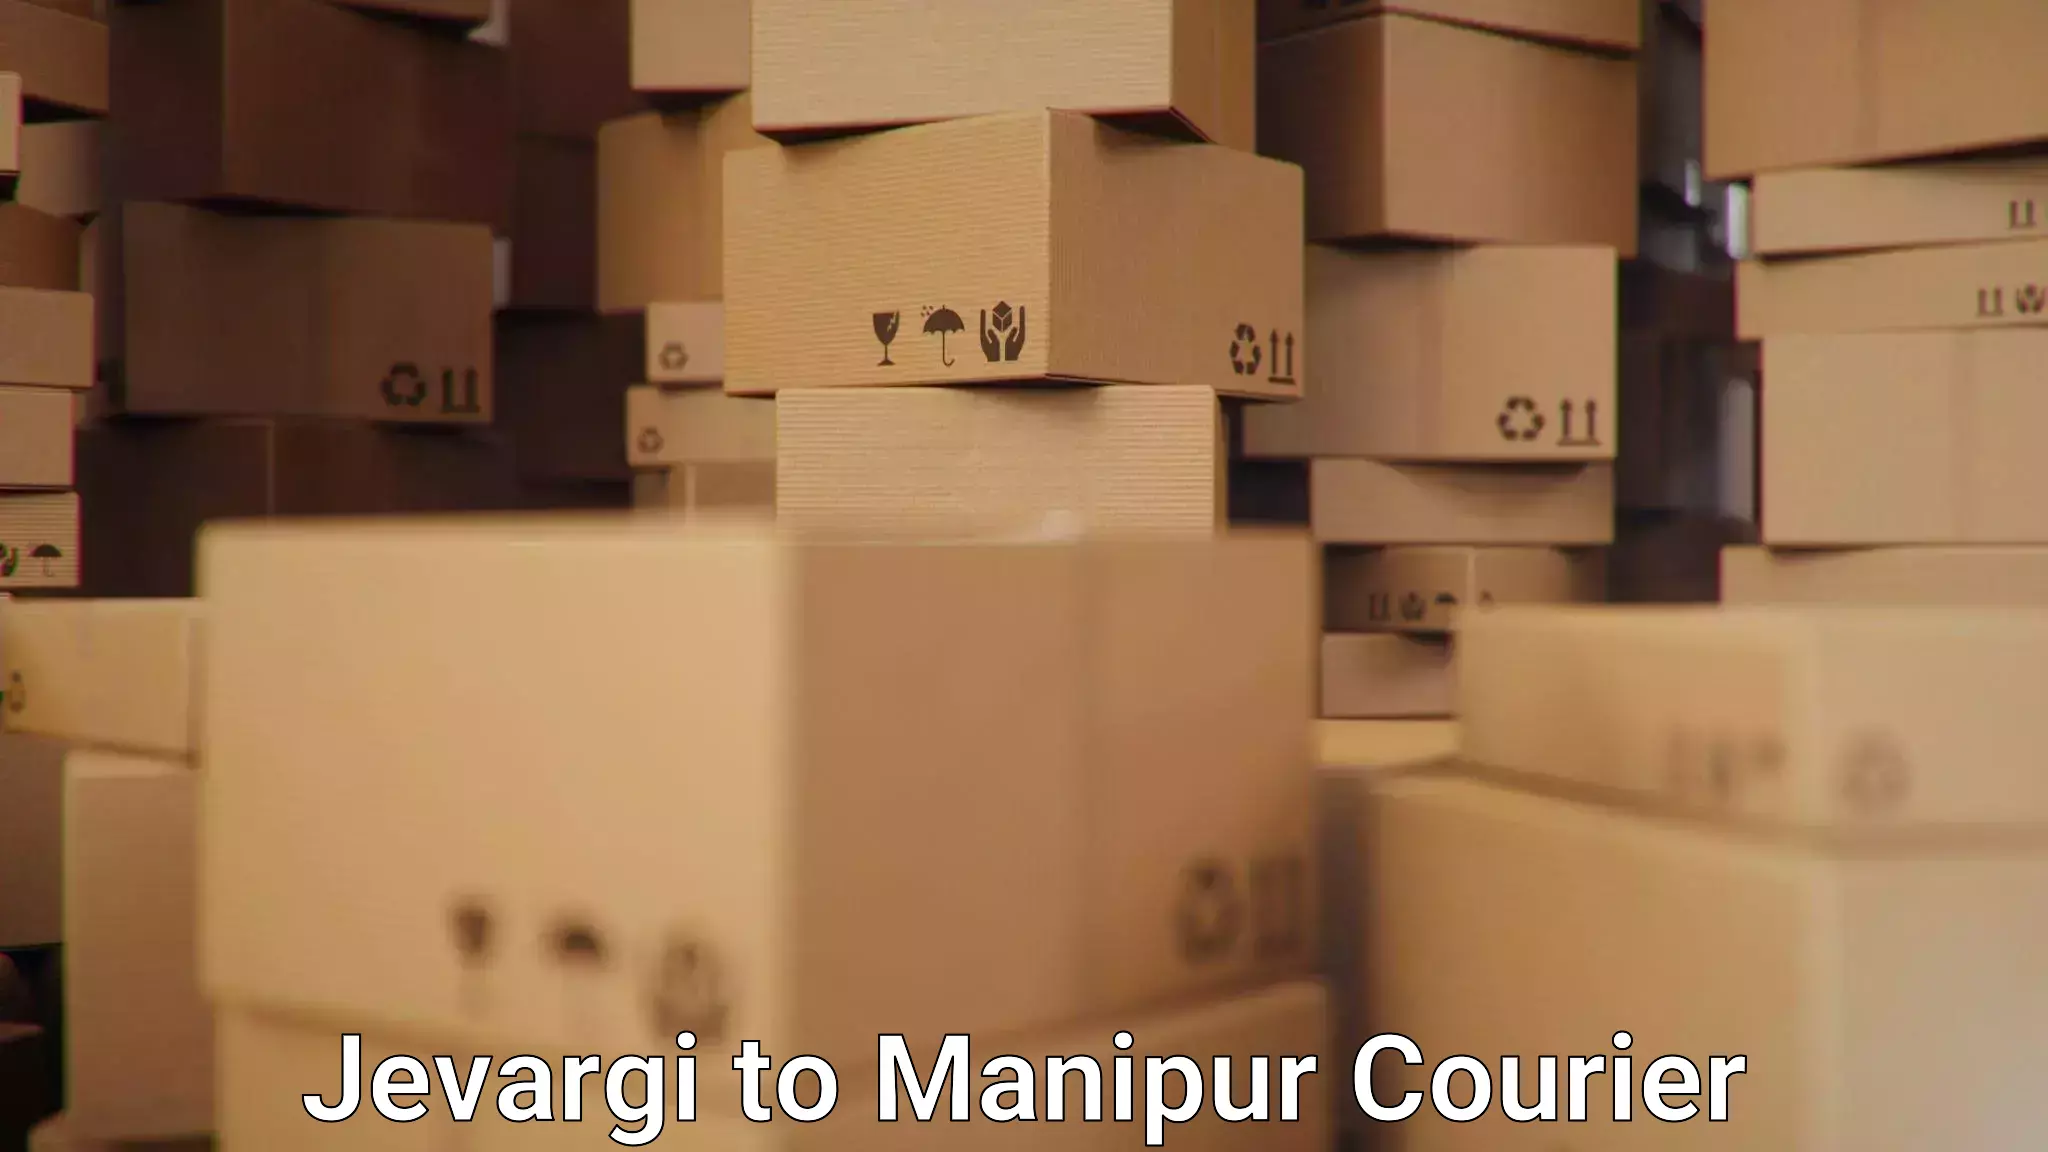 Courier service comparison Jevargi to Manipur